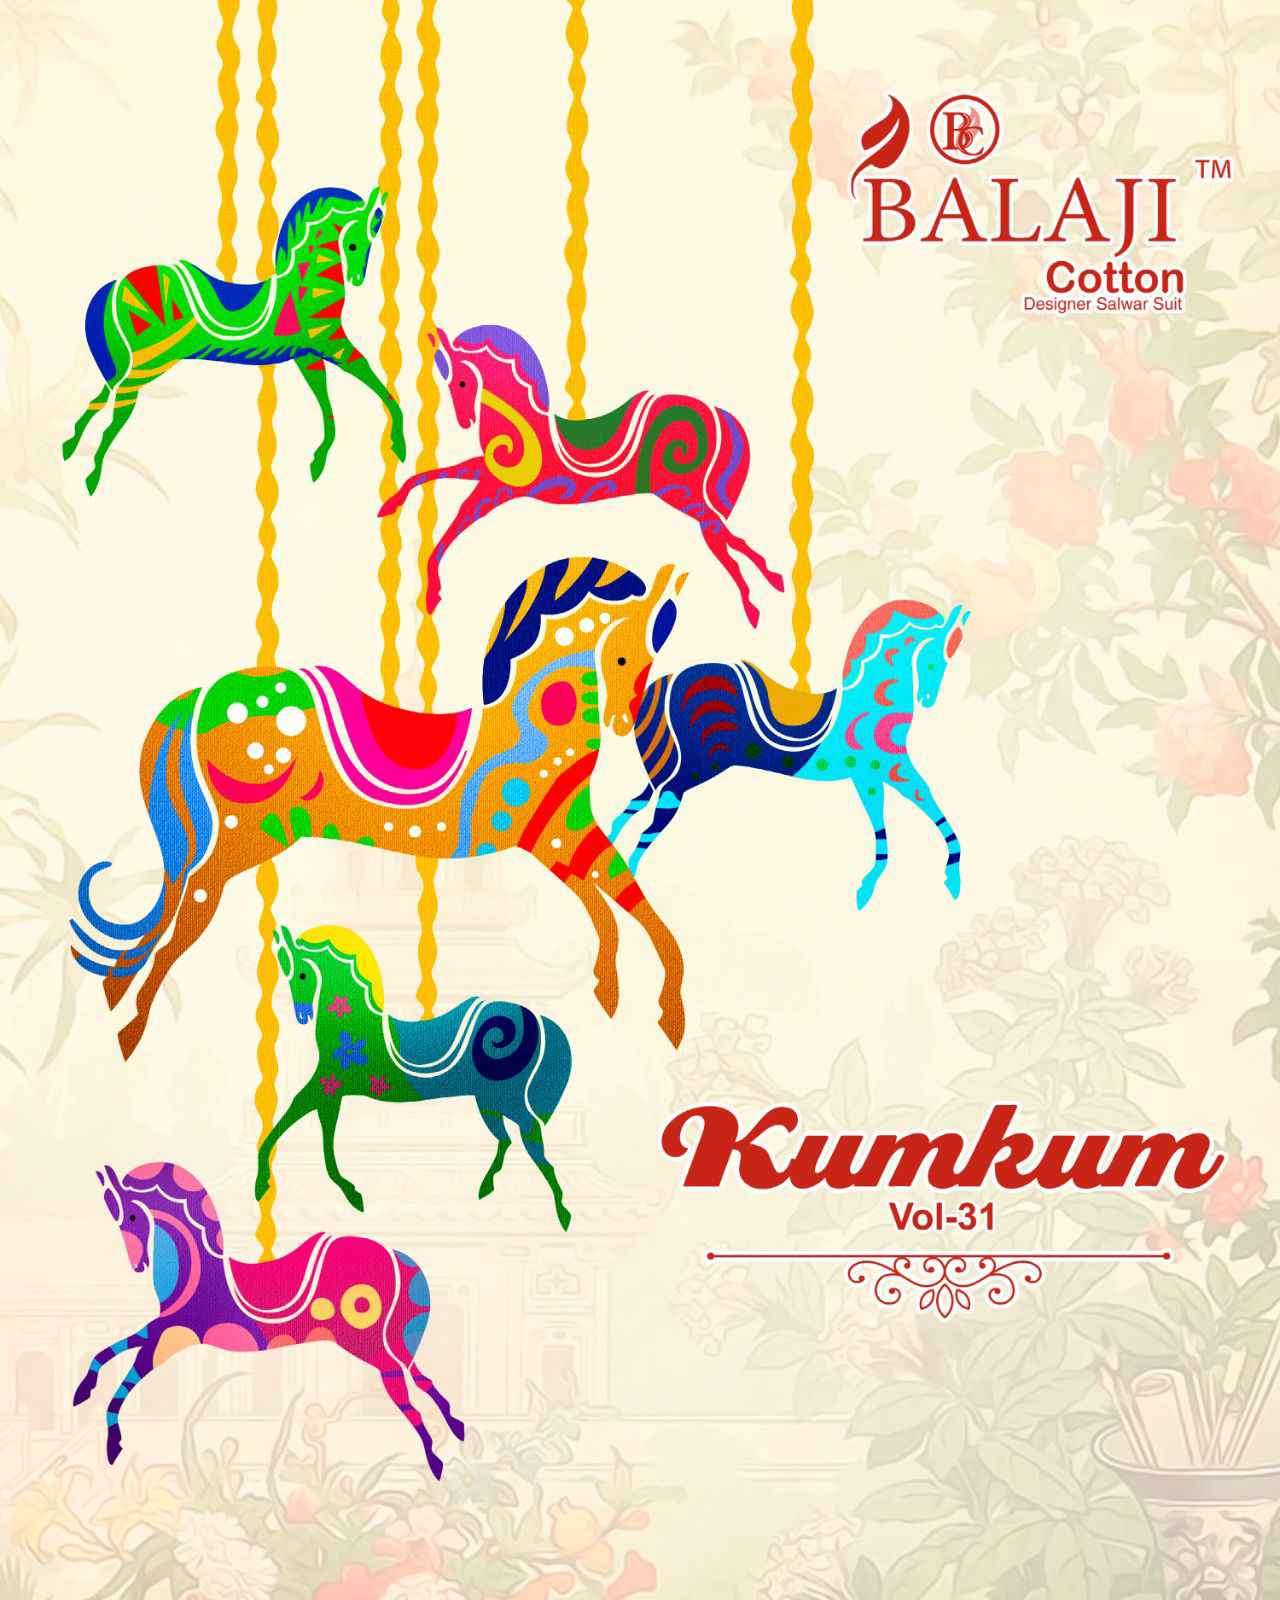 Balaji Cotton Kumkum Vol 31 Fancy Cotton Dress Material Catalog Supplier